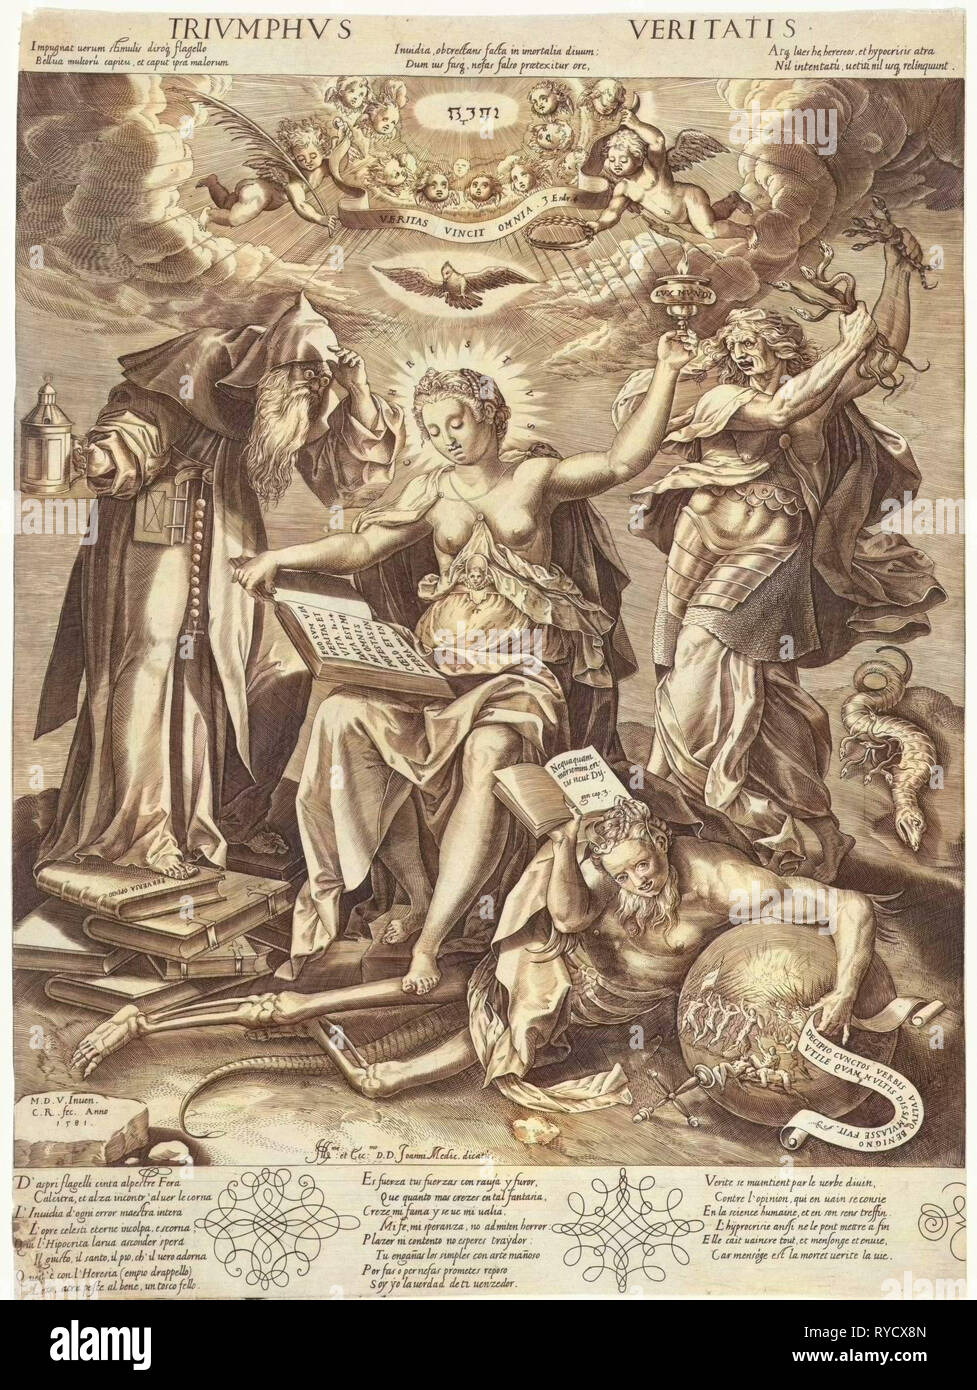 Triumph of Truth, Monogrammist CR (16e eeuw), Hieronymus Wierix, Joanni Medic, 1581 Stock Photo